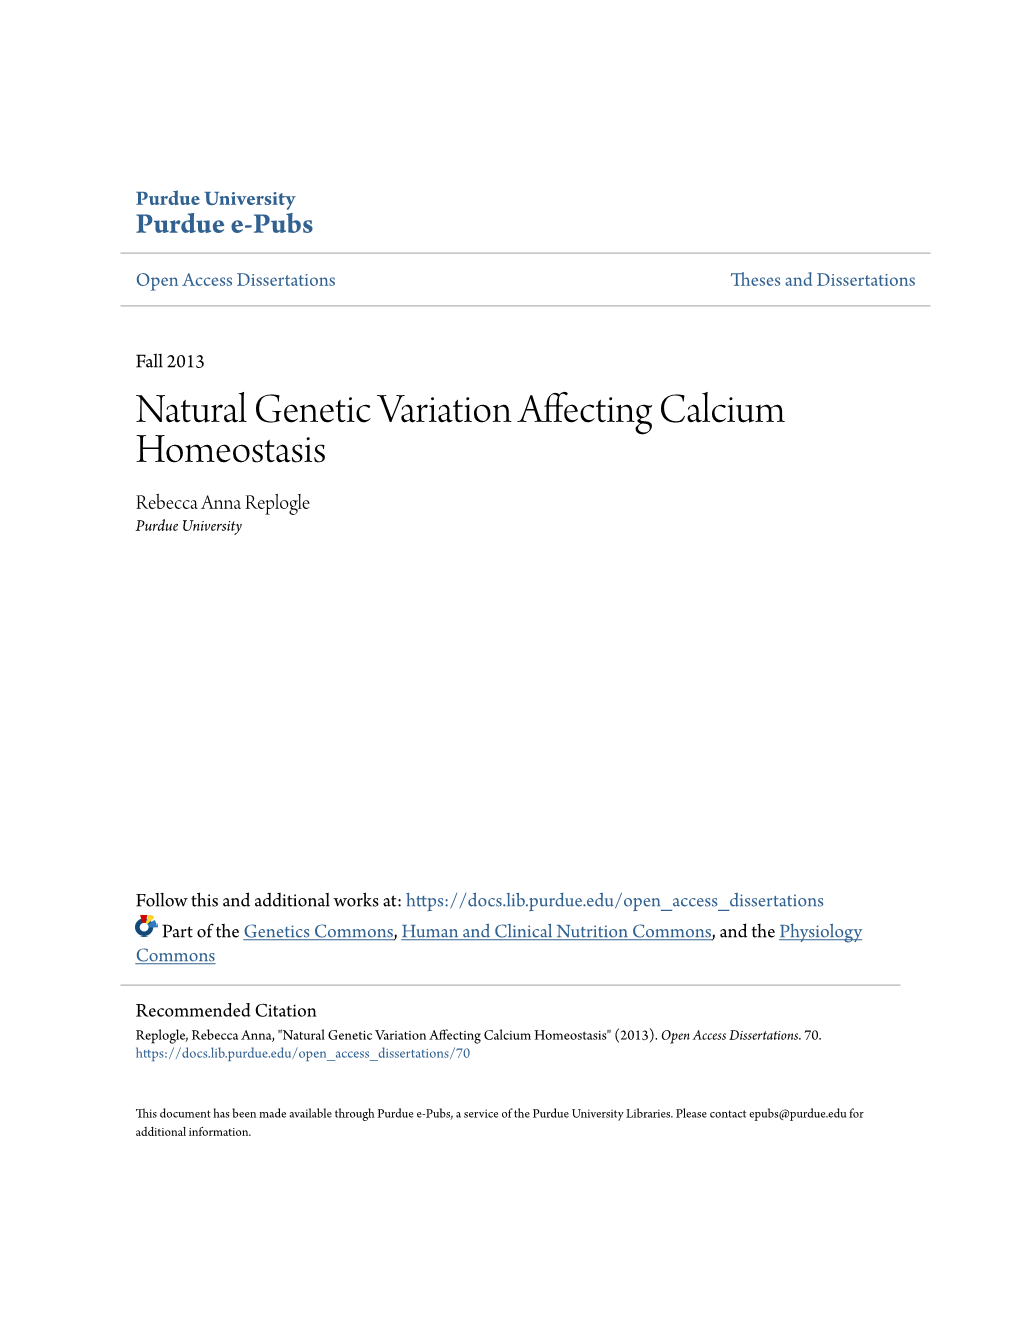 Natural Genetic Variation Affecting Calcium Homeostasis Rebecca Anna Replogle Purdue University